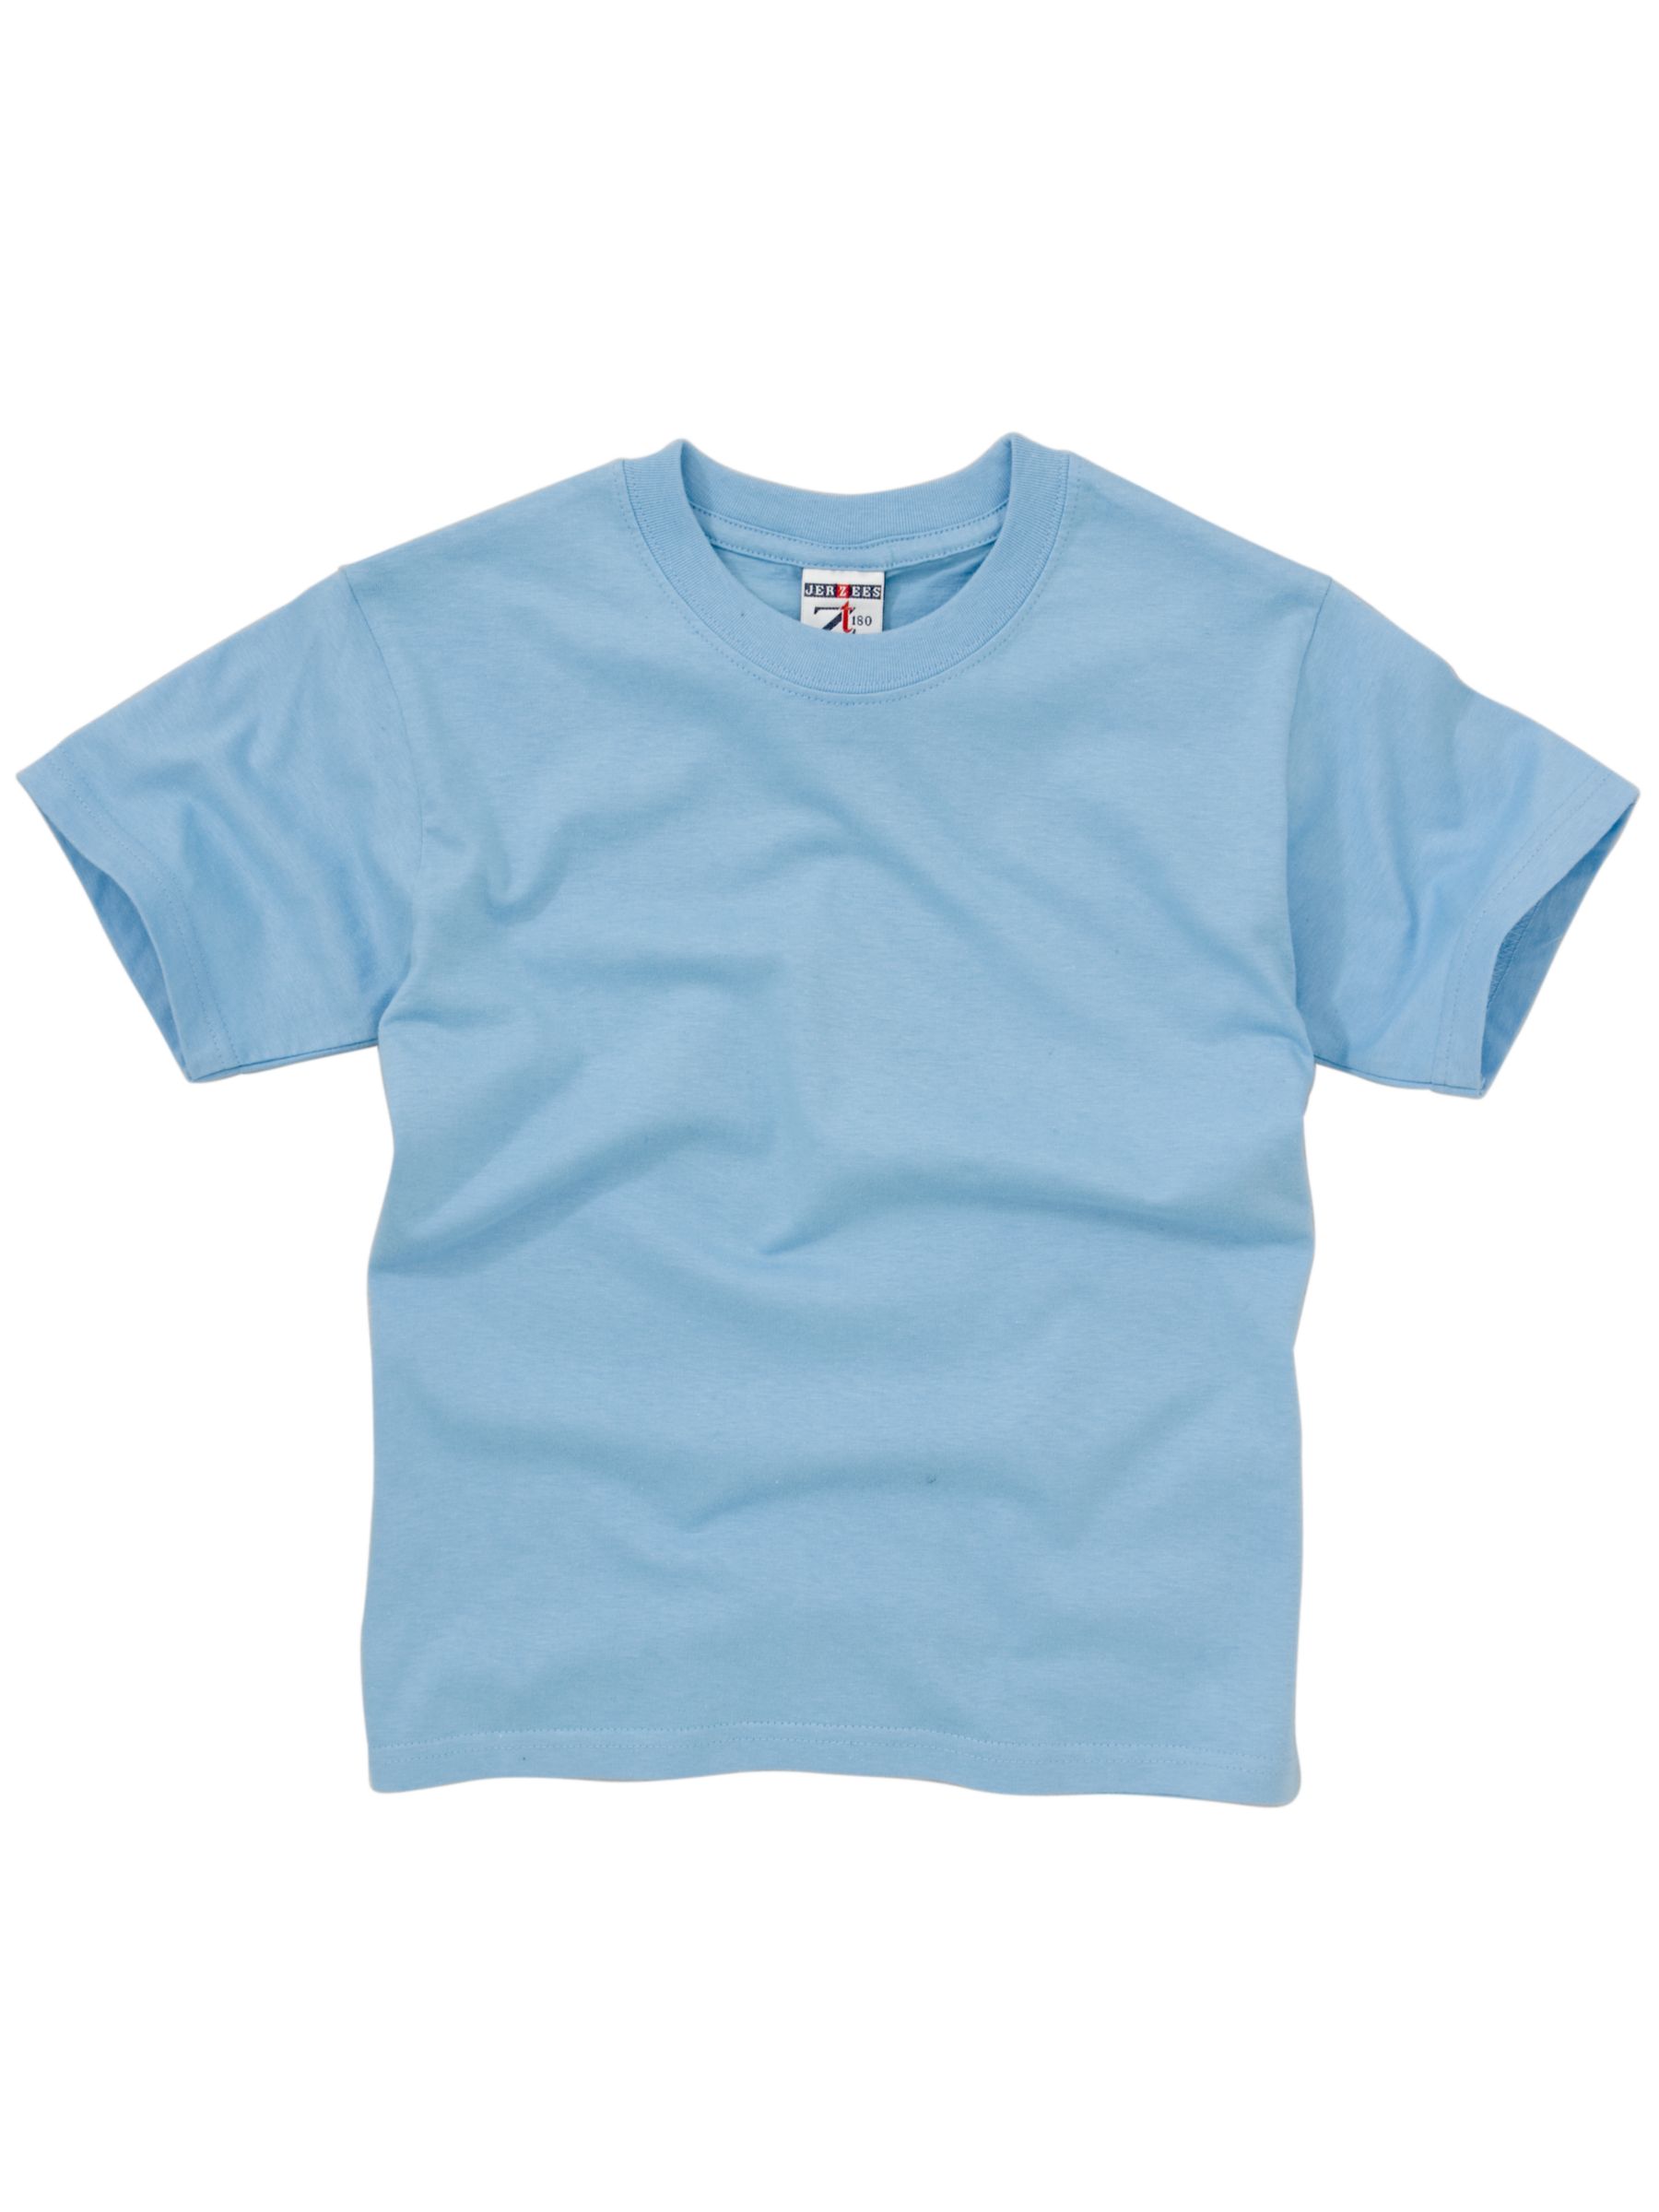 John Lewis School Unisex T-Shirt, Sky blue